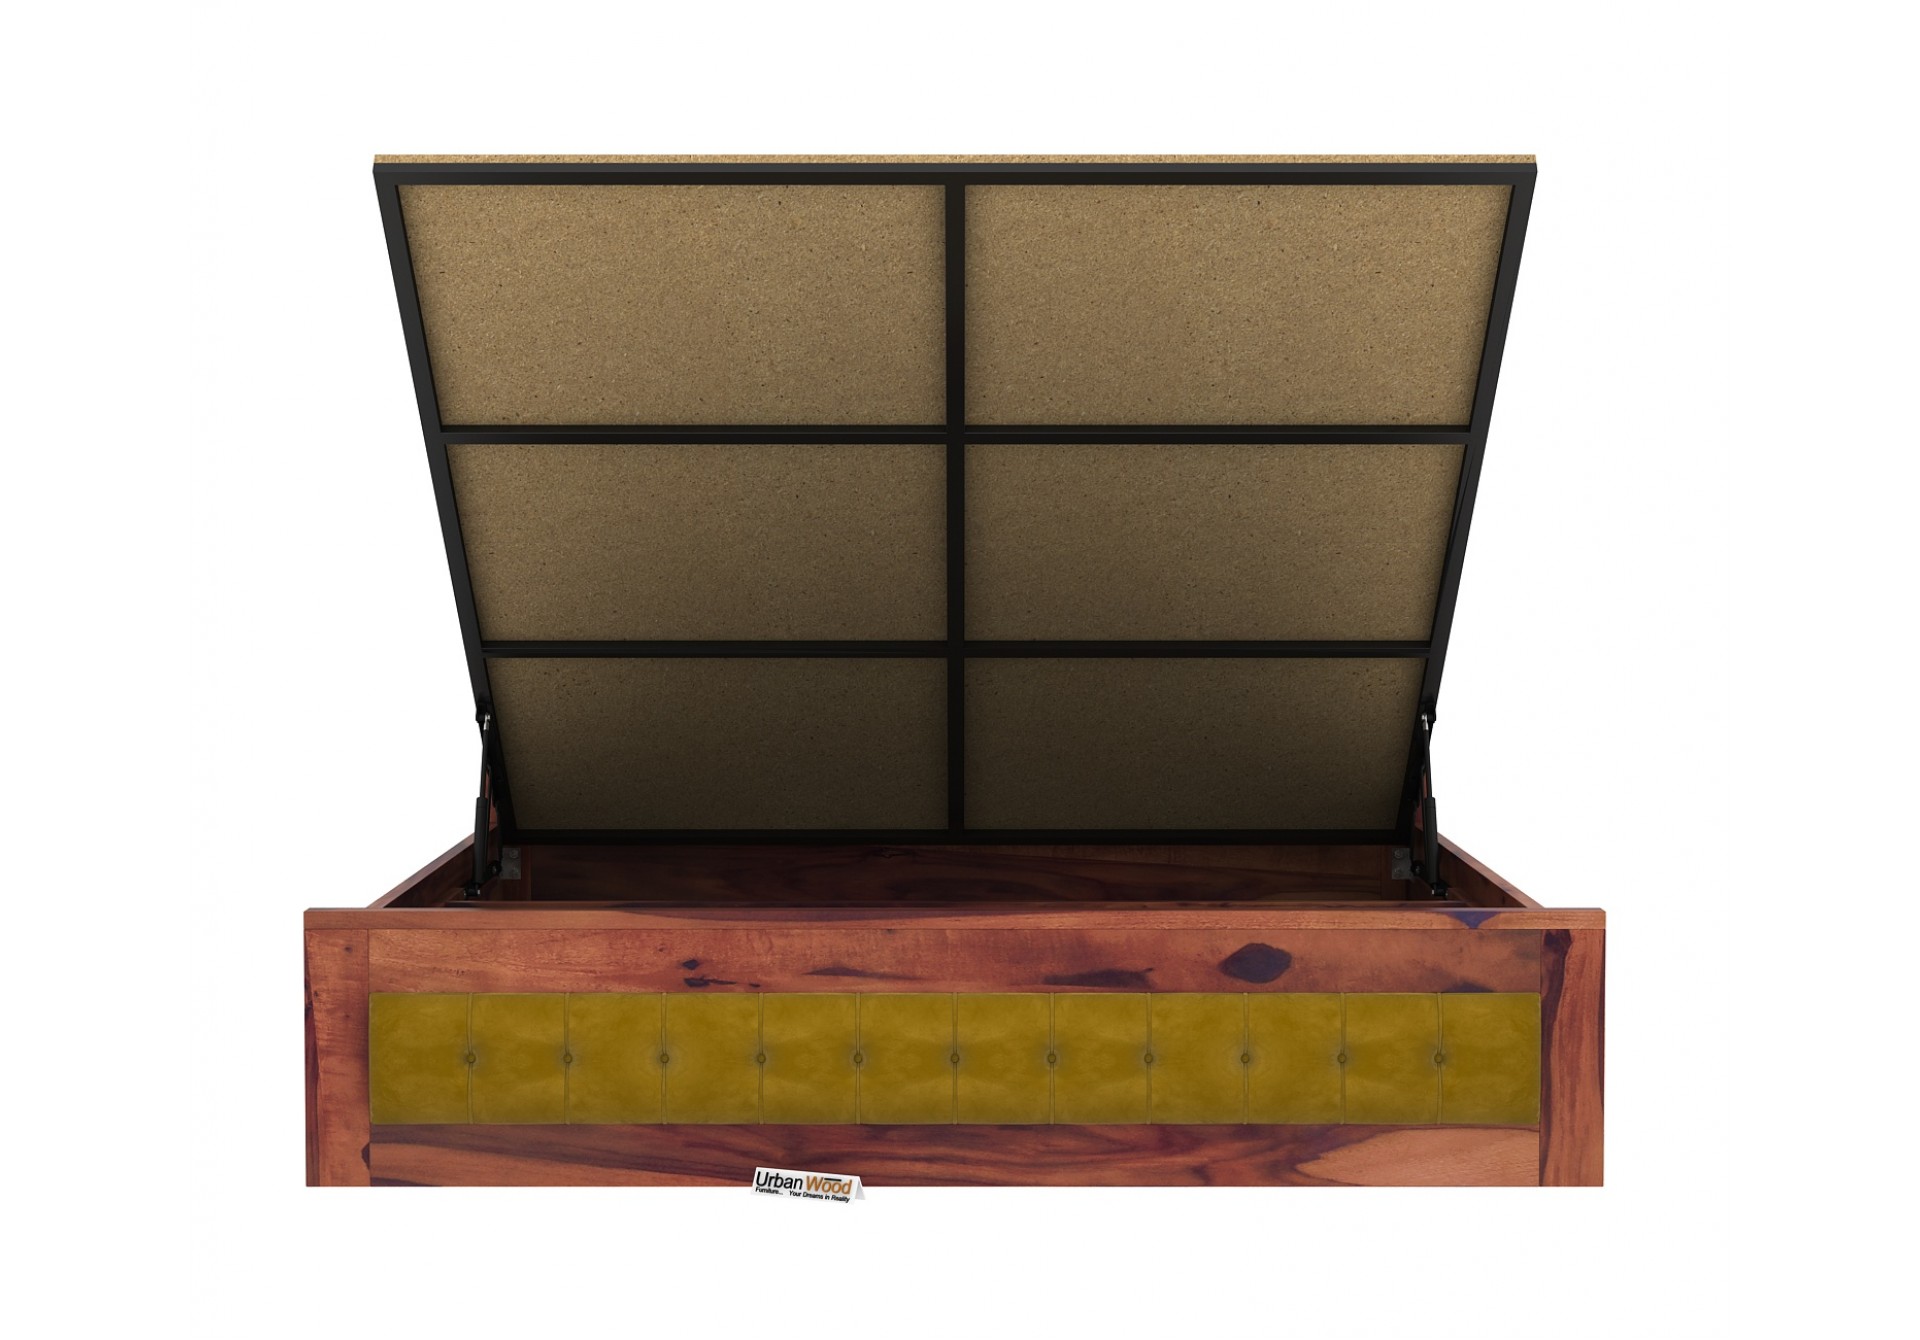 Jolly Wooden Bed Hydraulic Storage ( Queen Size, Teak Finish )